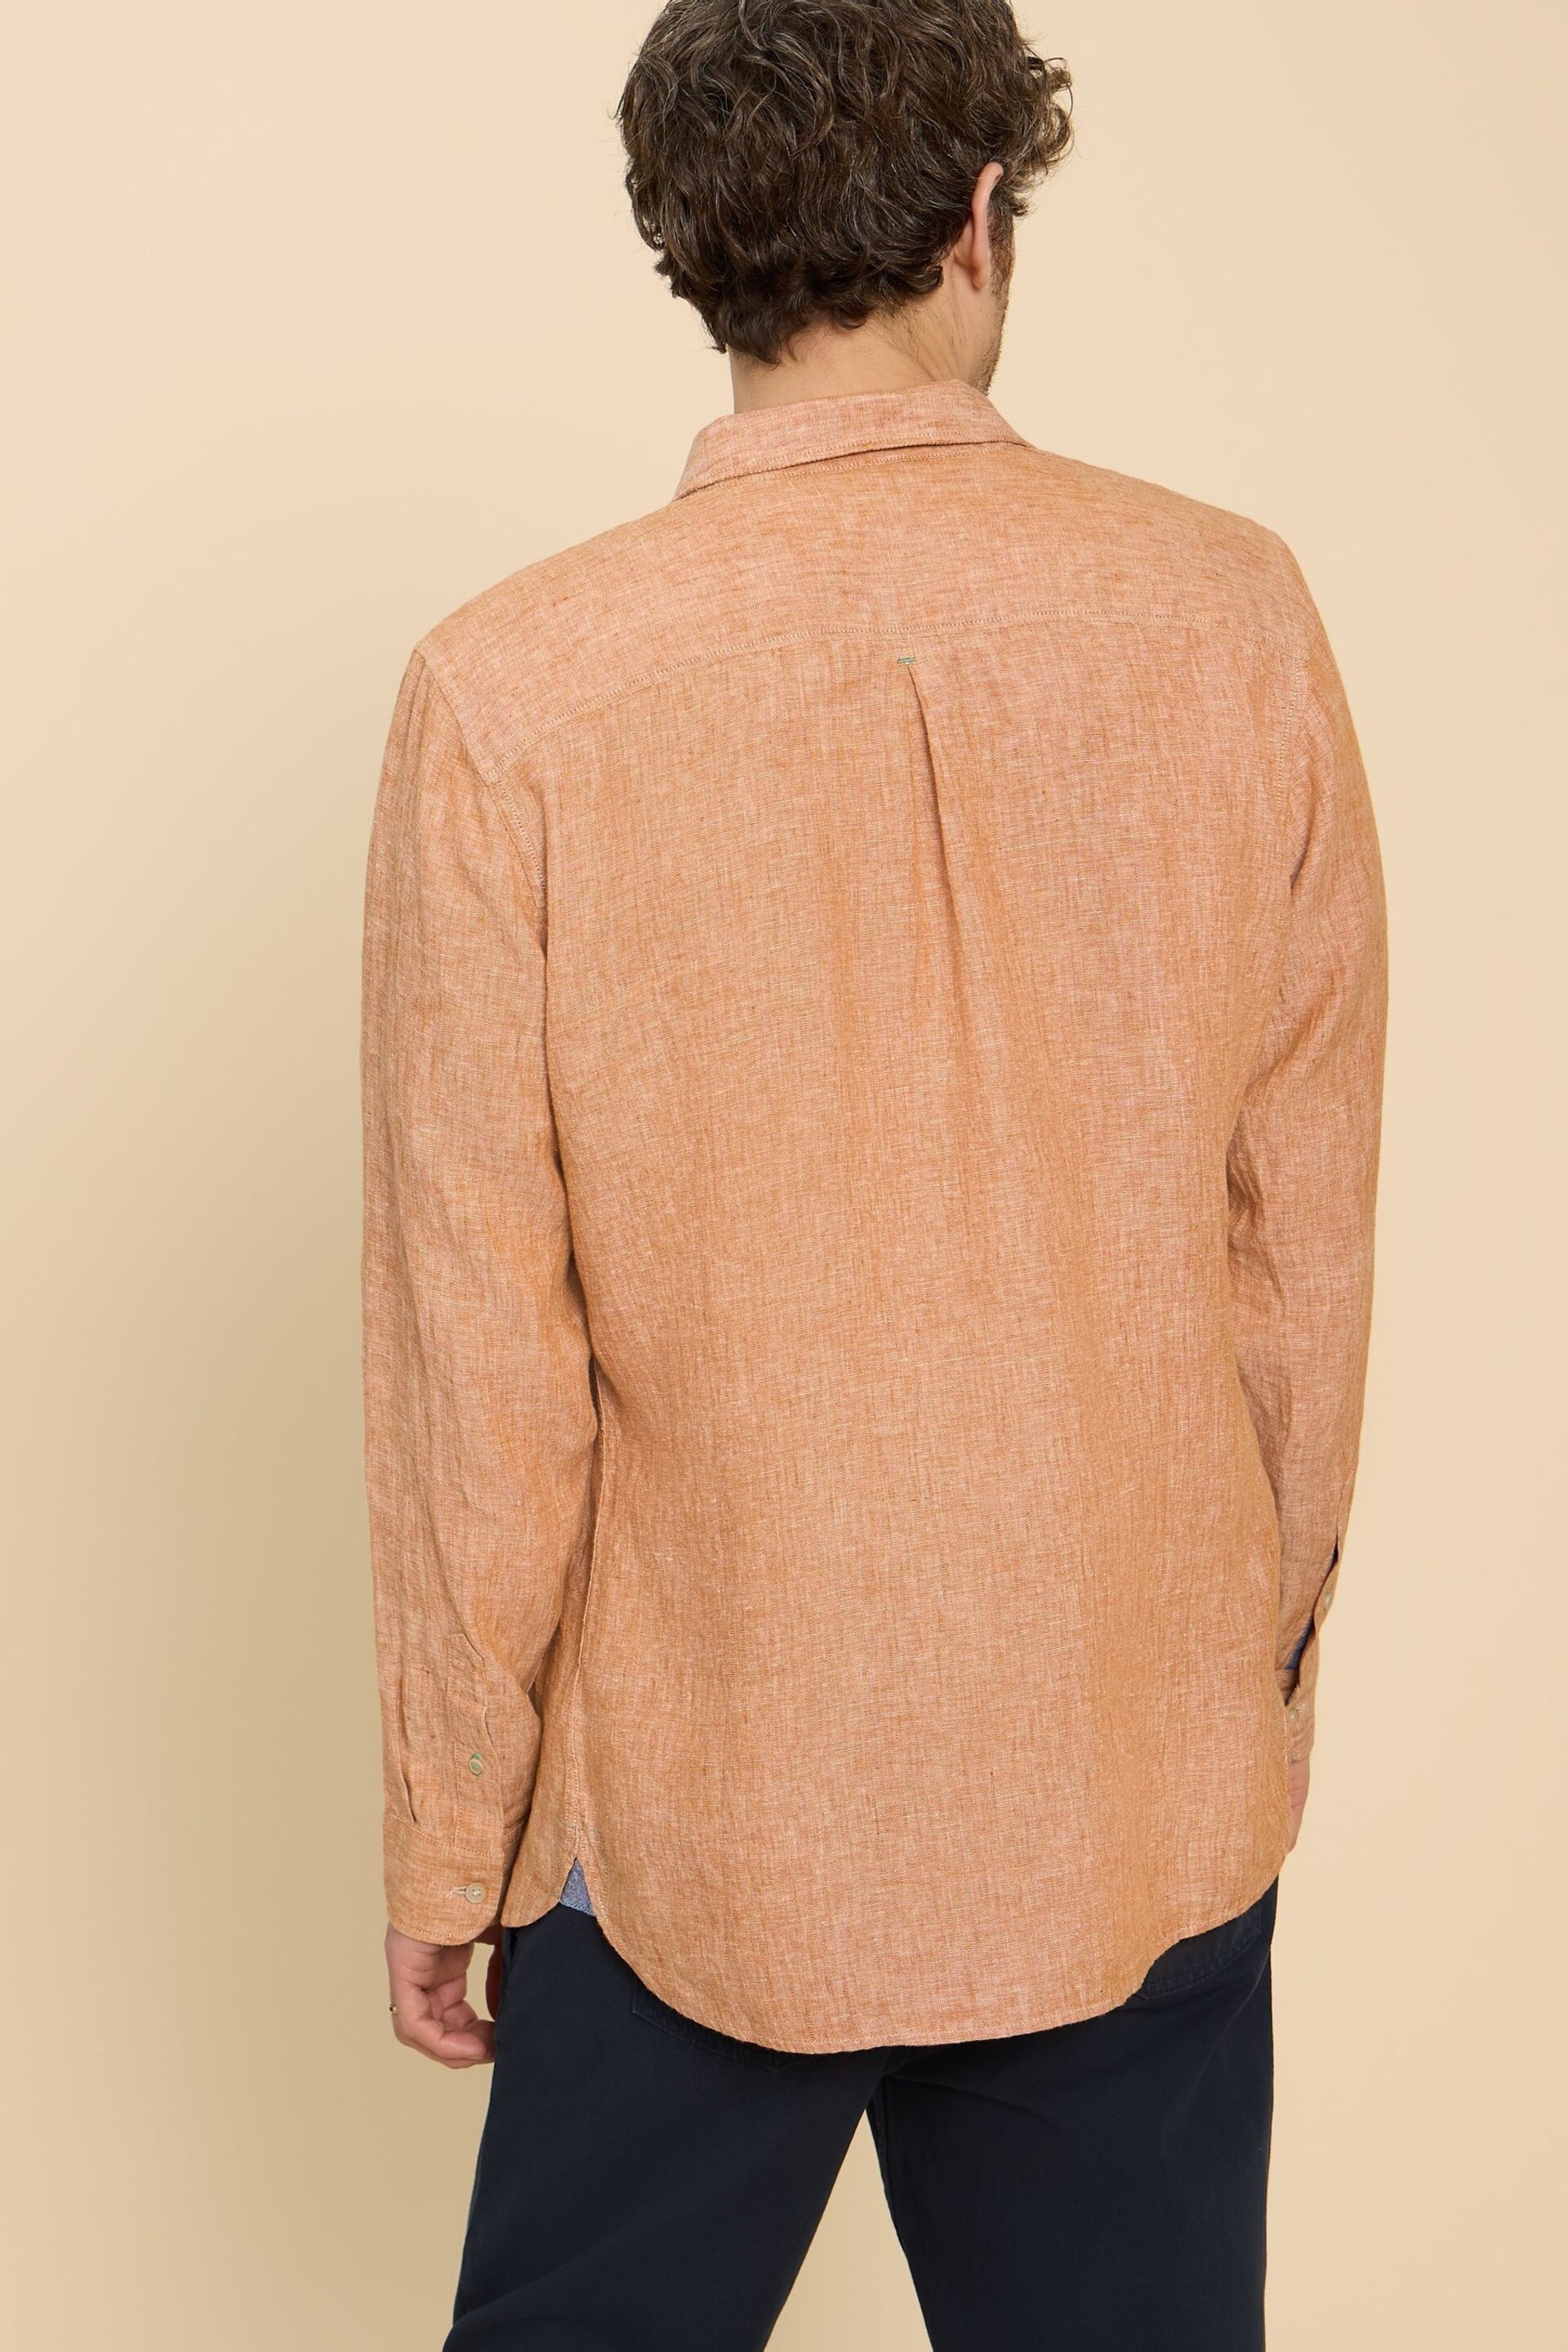 White Stuff Orange Pembroke Long Sleeve Linen Shirt - Image 2 of 7